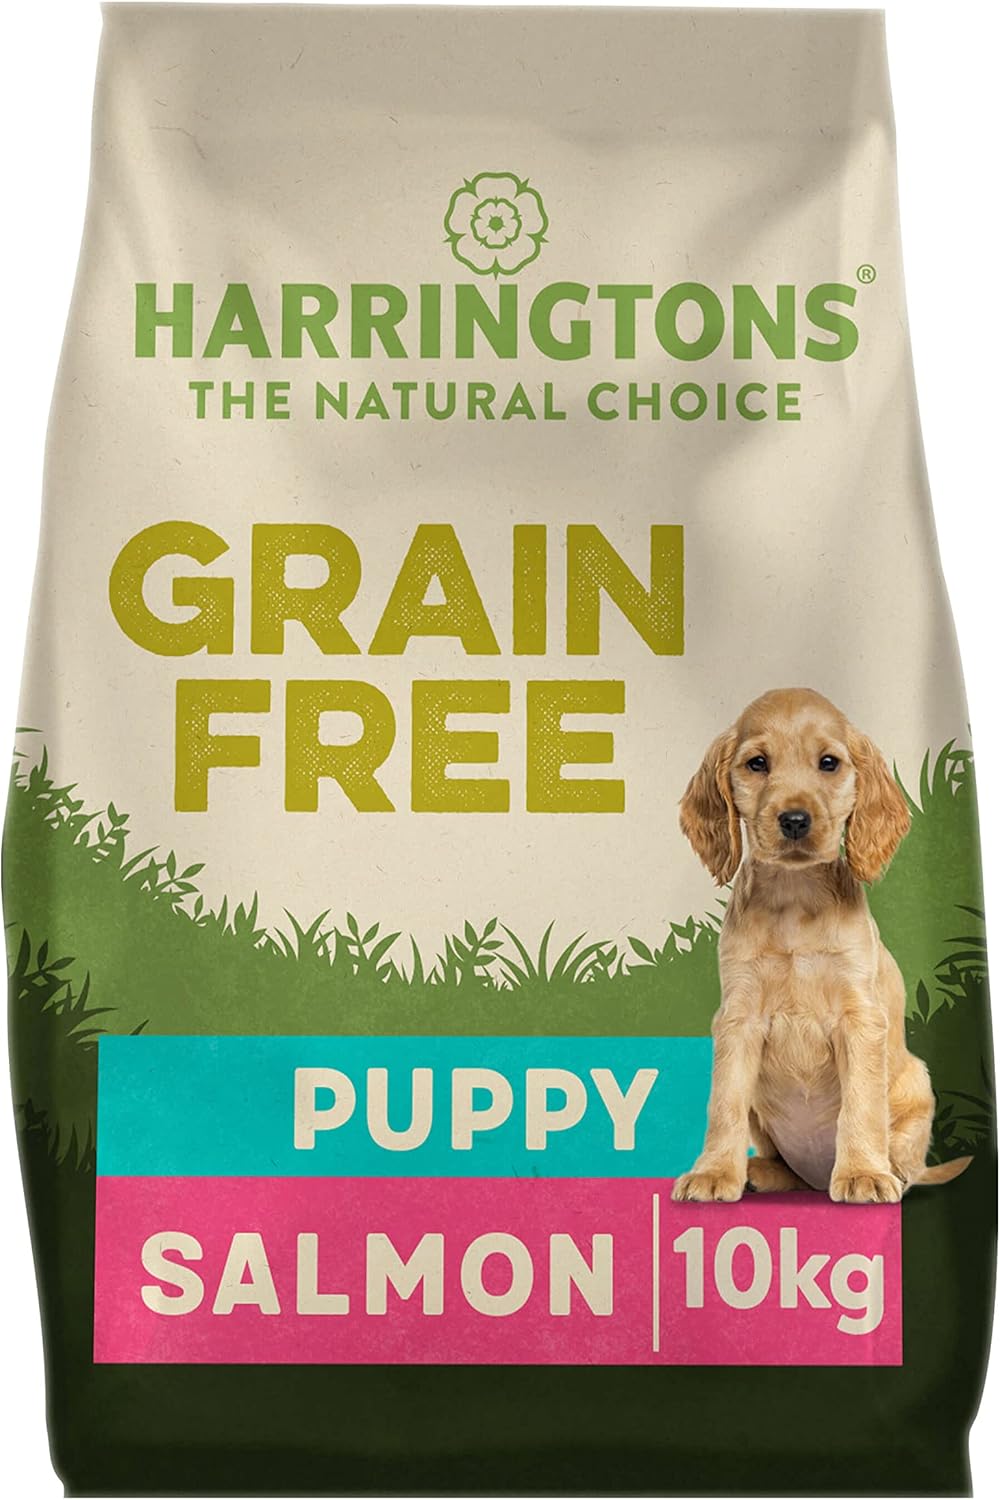 Harringtons Grain Free Puppy Salmon 10kg?GFHYPS-10